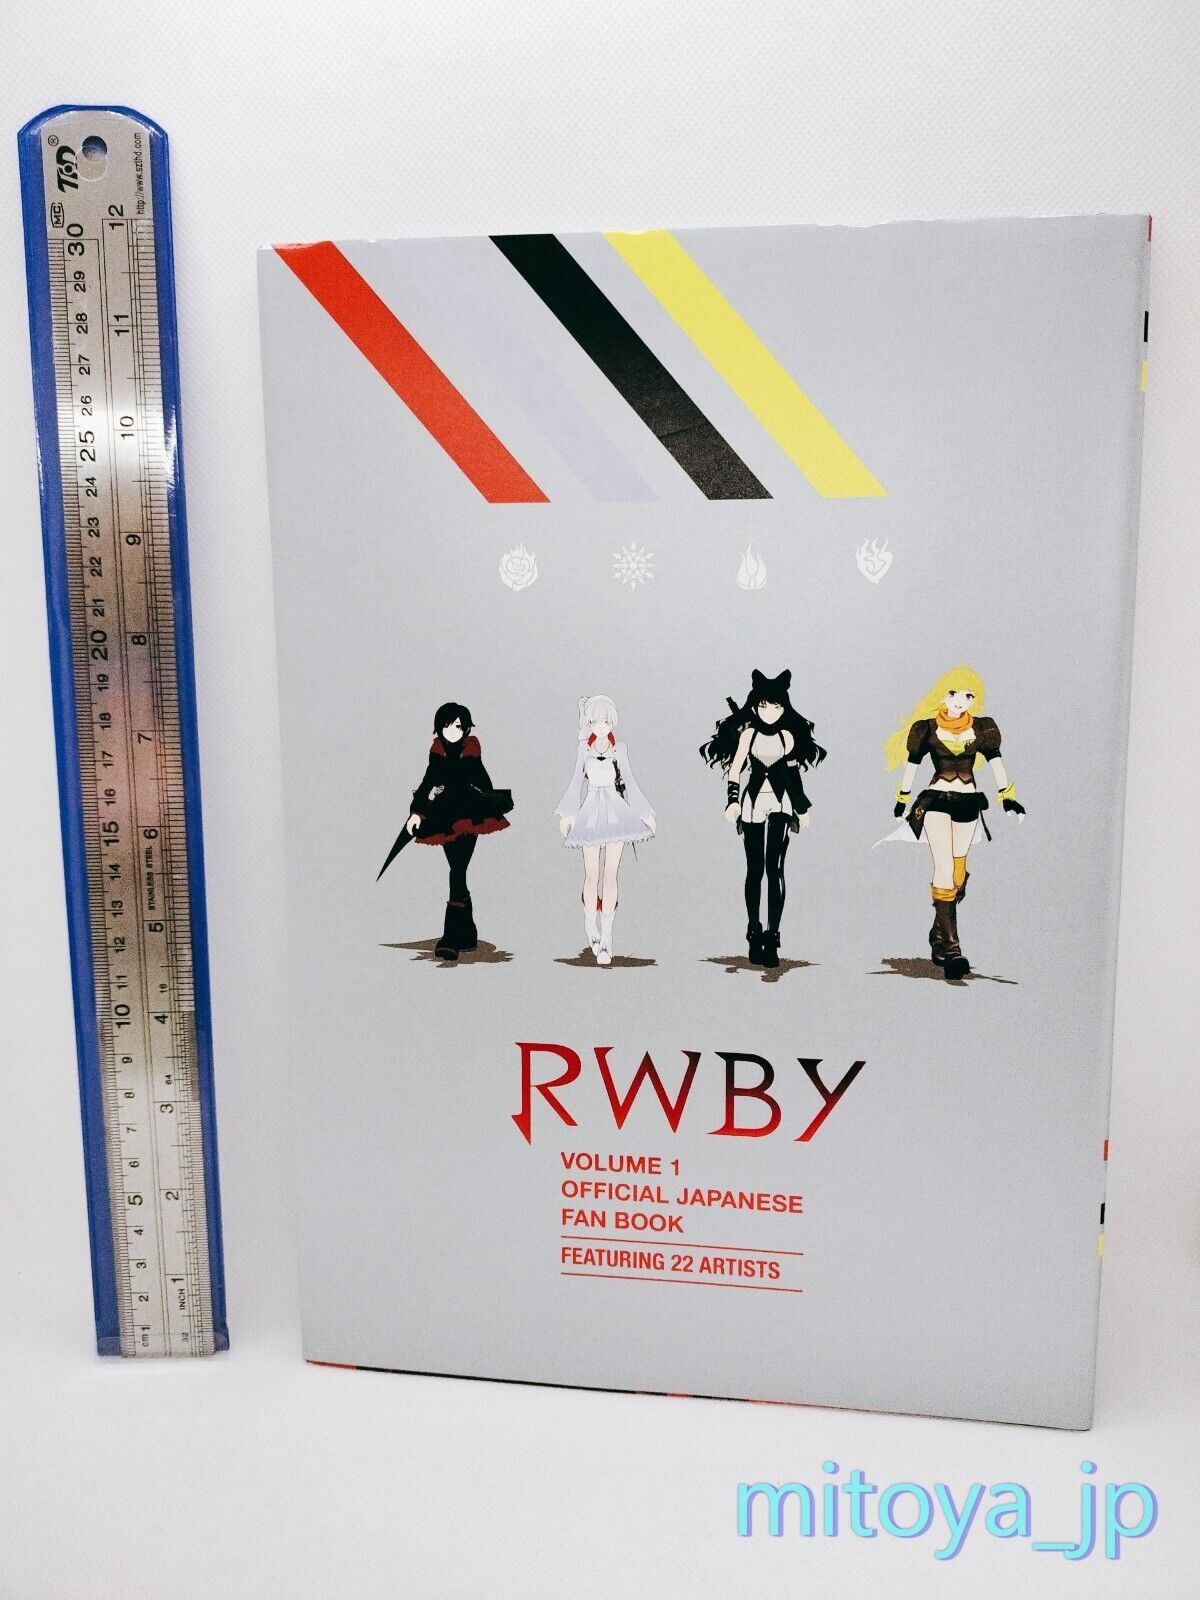 RWBY VOLUME1 OFFICIAL JAPANESE FAN BOOK FEATURING 22 ARTISTS Art book